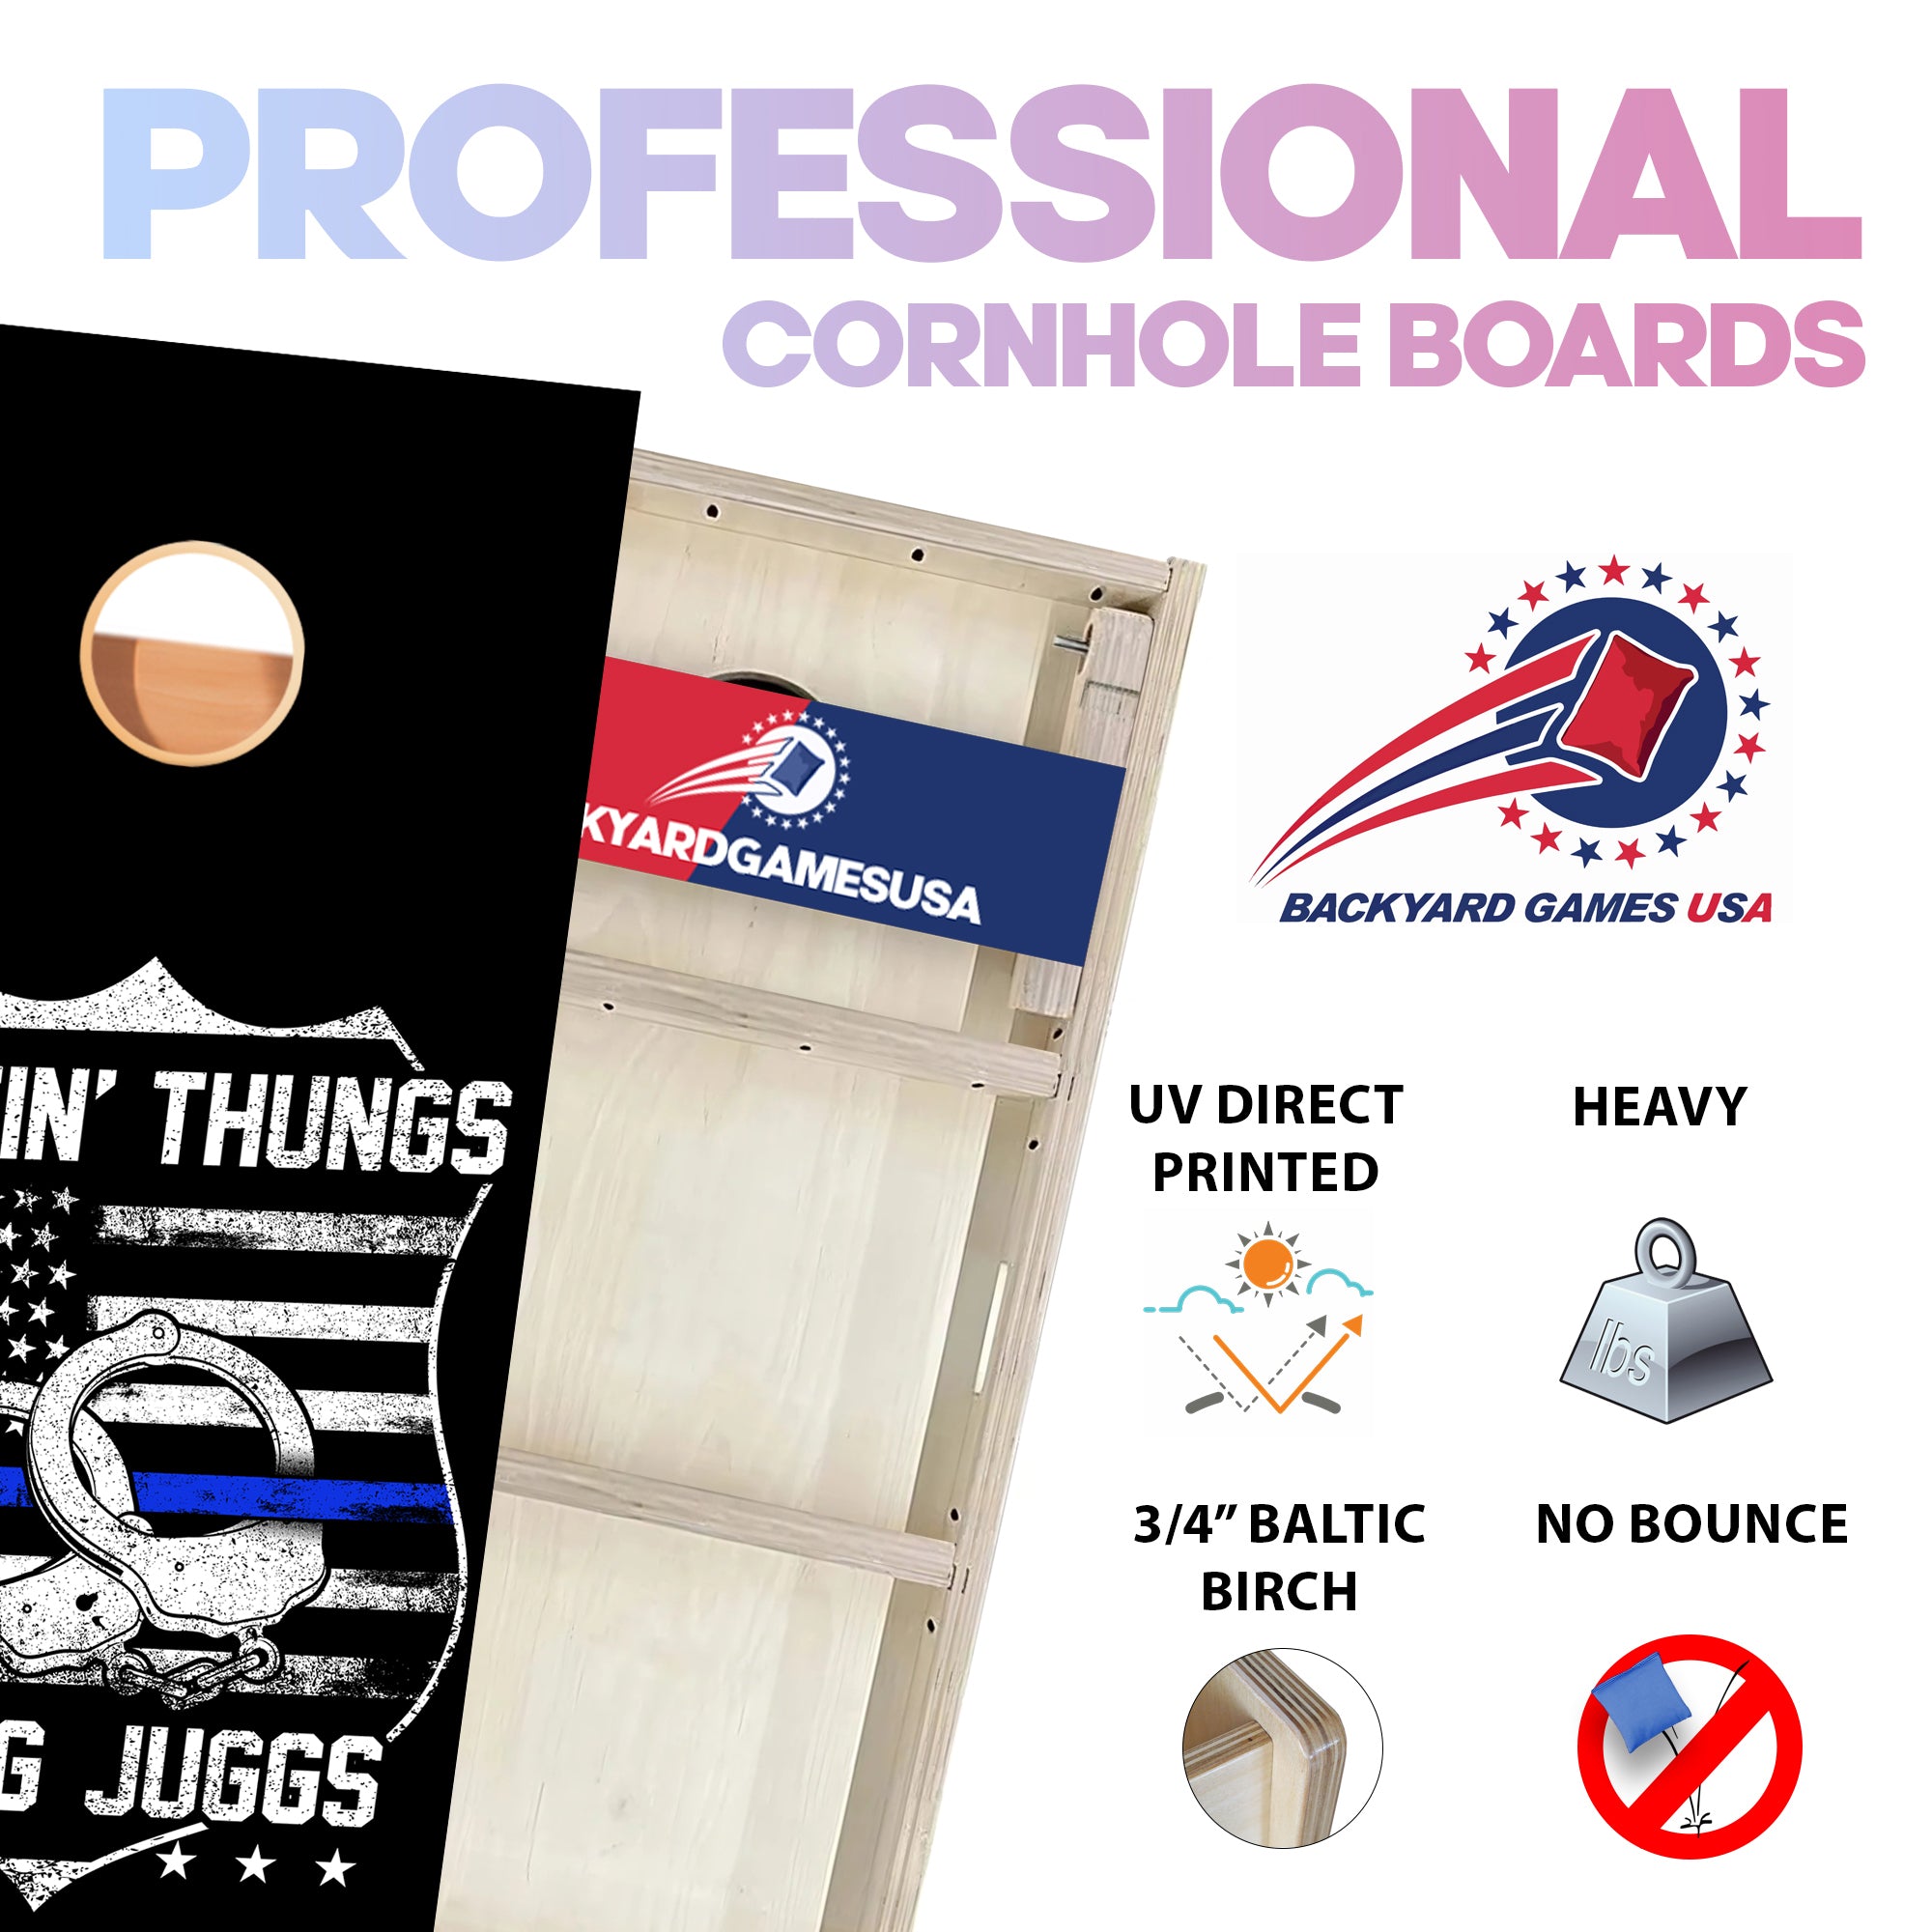 BUSTIN' THUNGS Professional Cornhole Boards